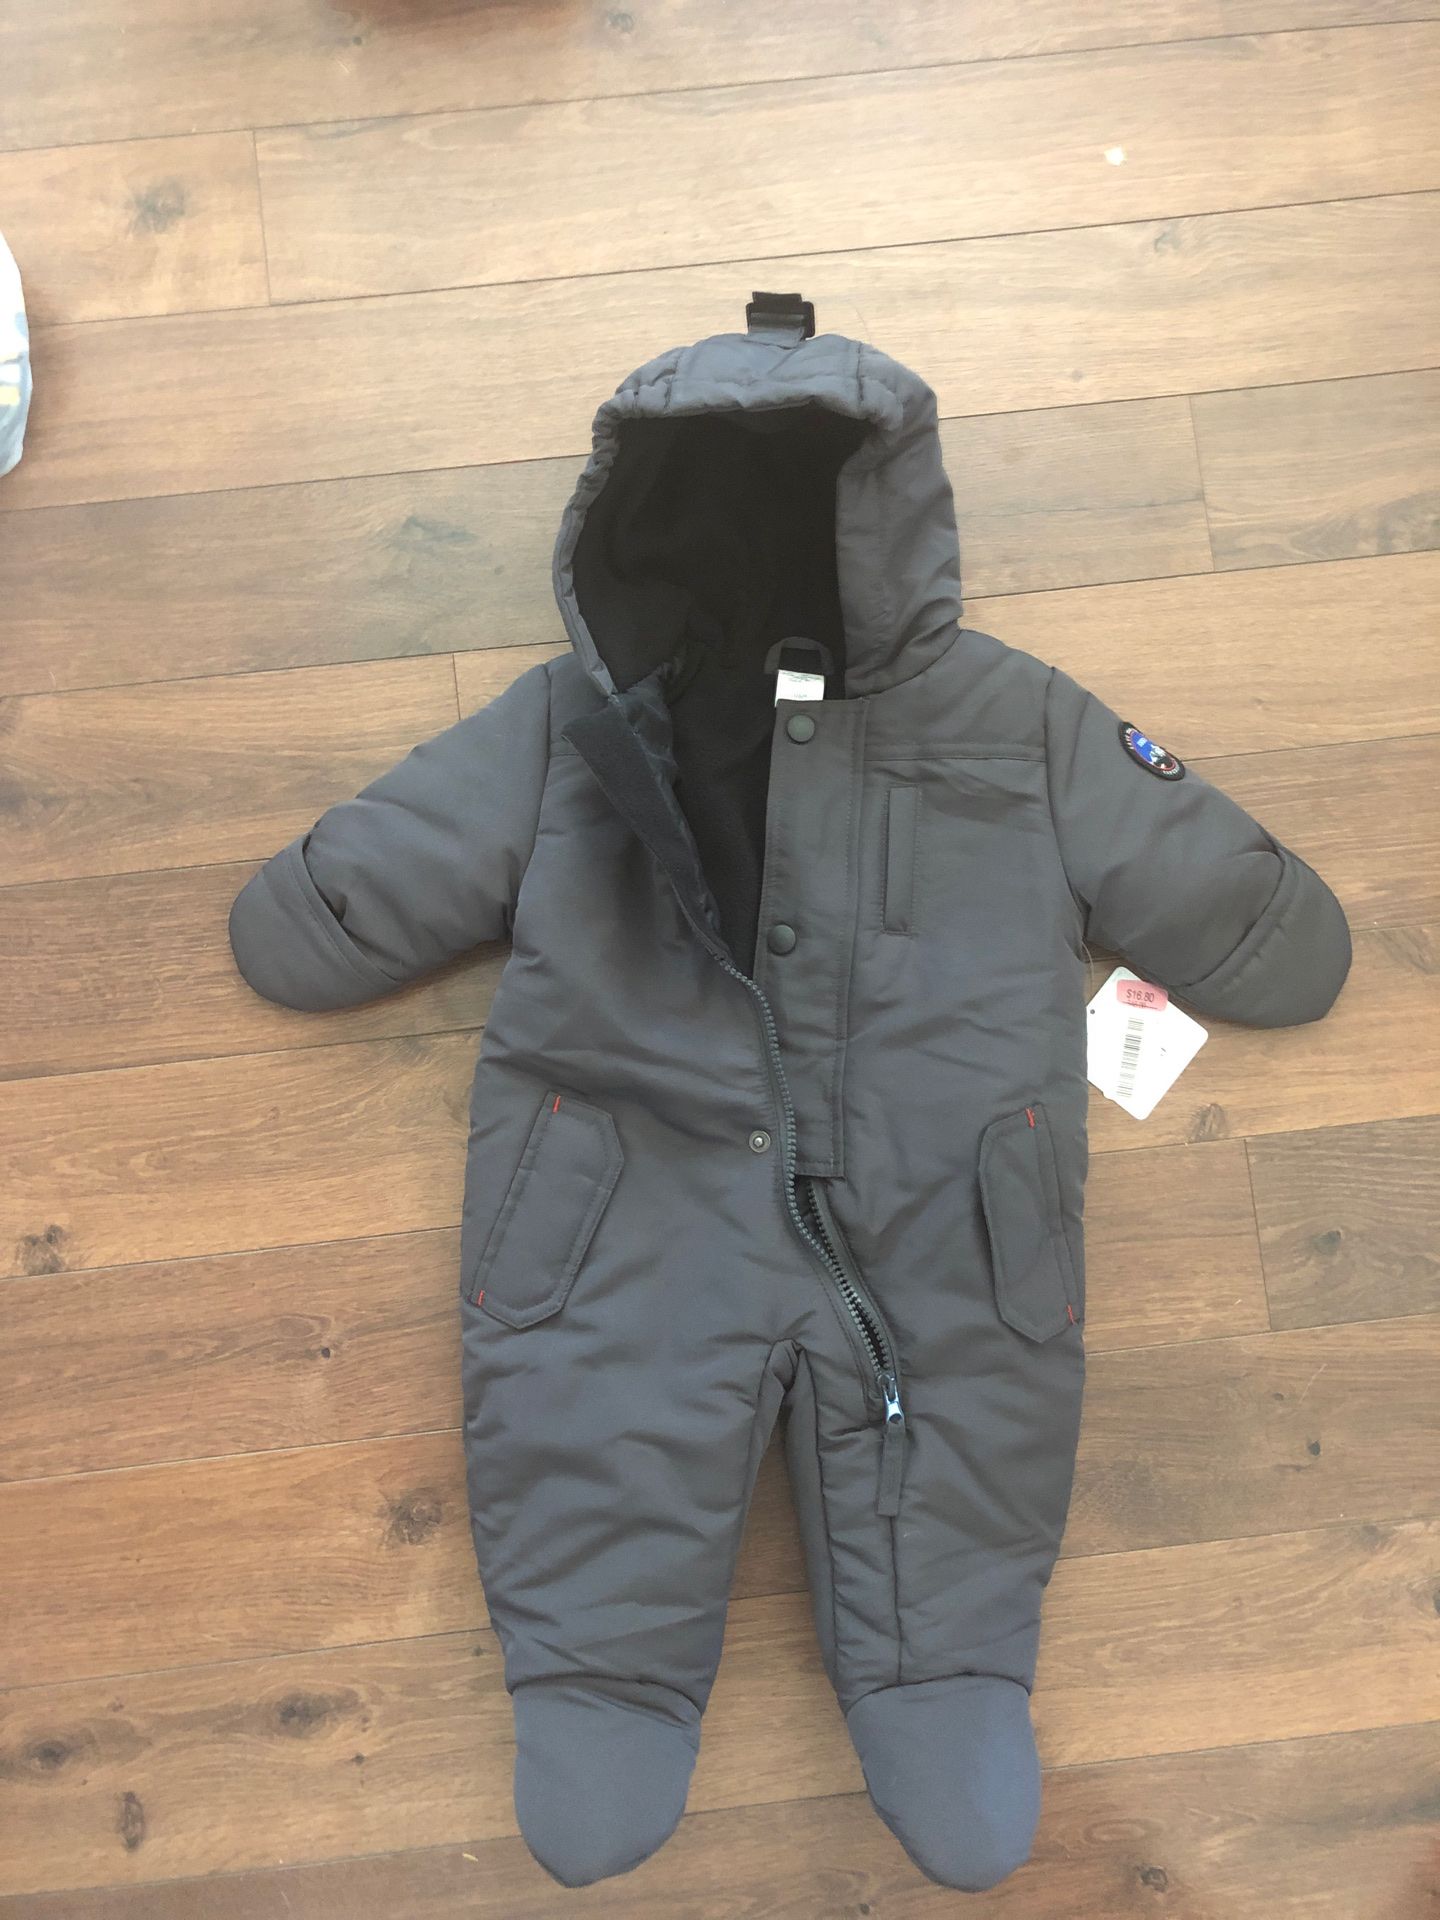 New infant snowsuit cost. Waterproof - size 3/6 months